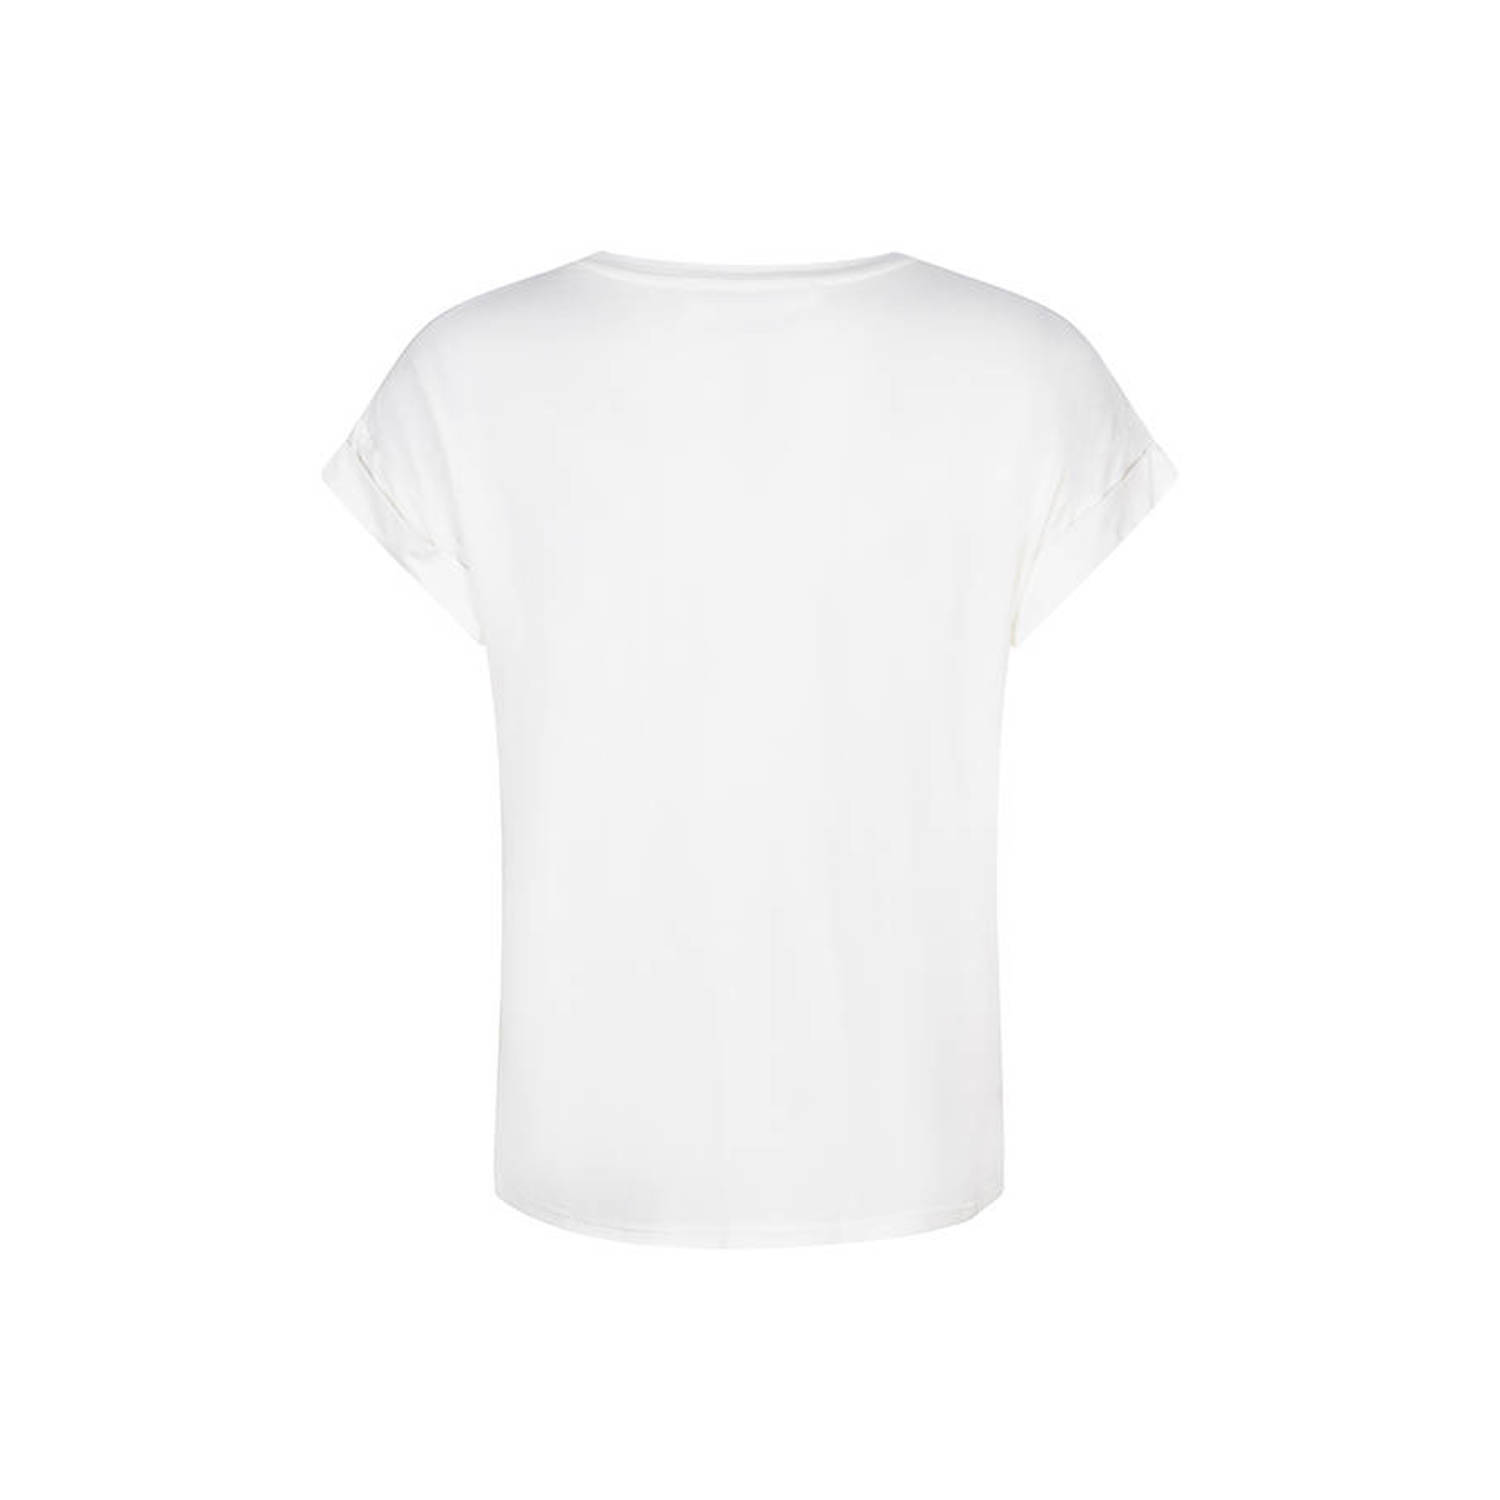 Lofty Manner T-shirt Davie met printopdruk wit rood